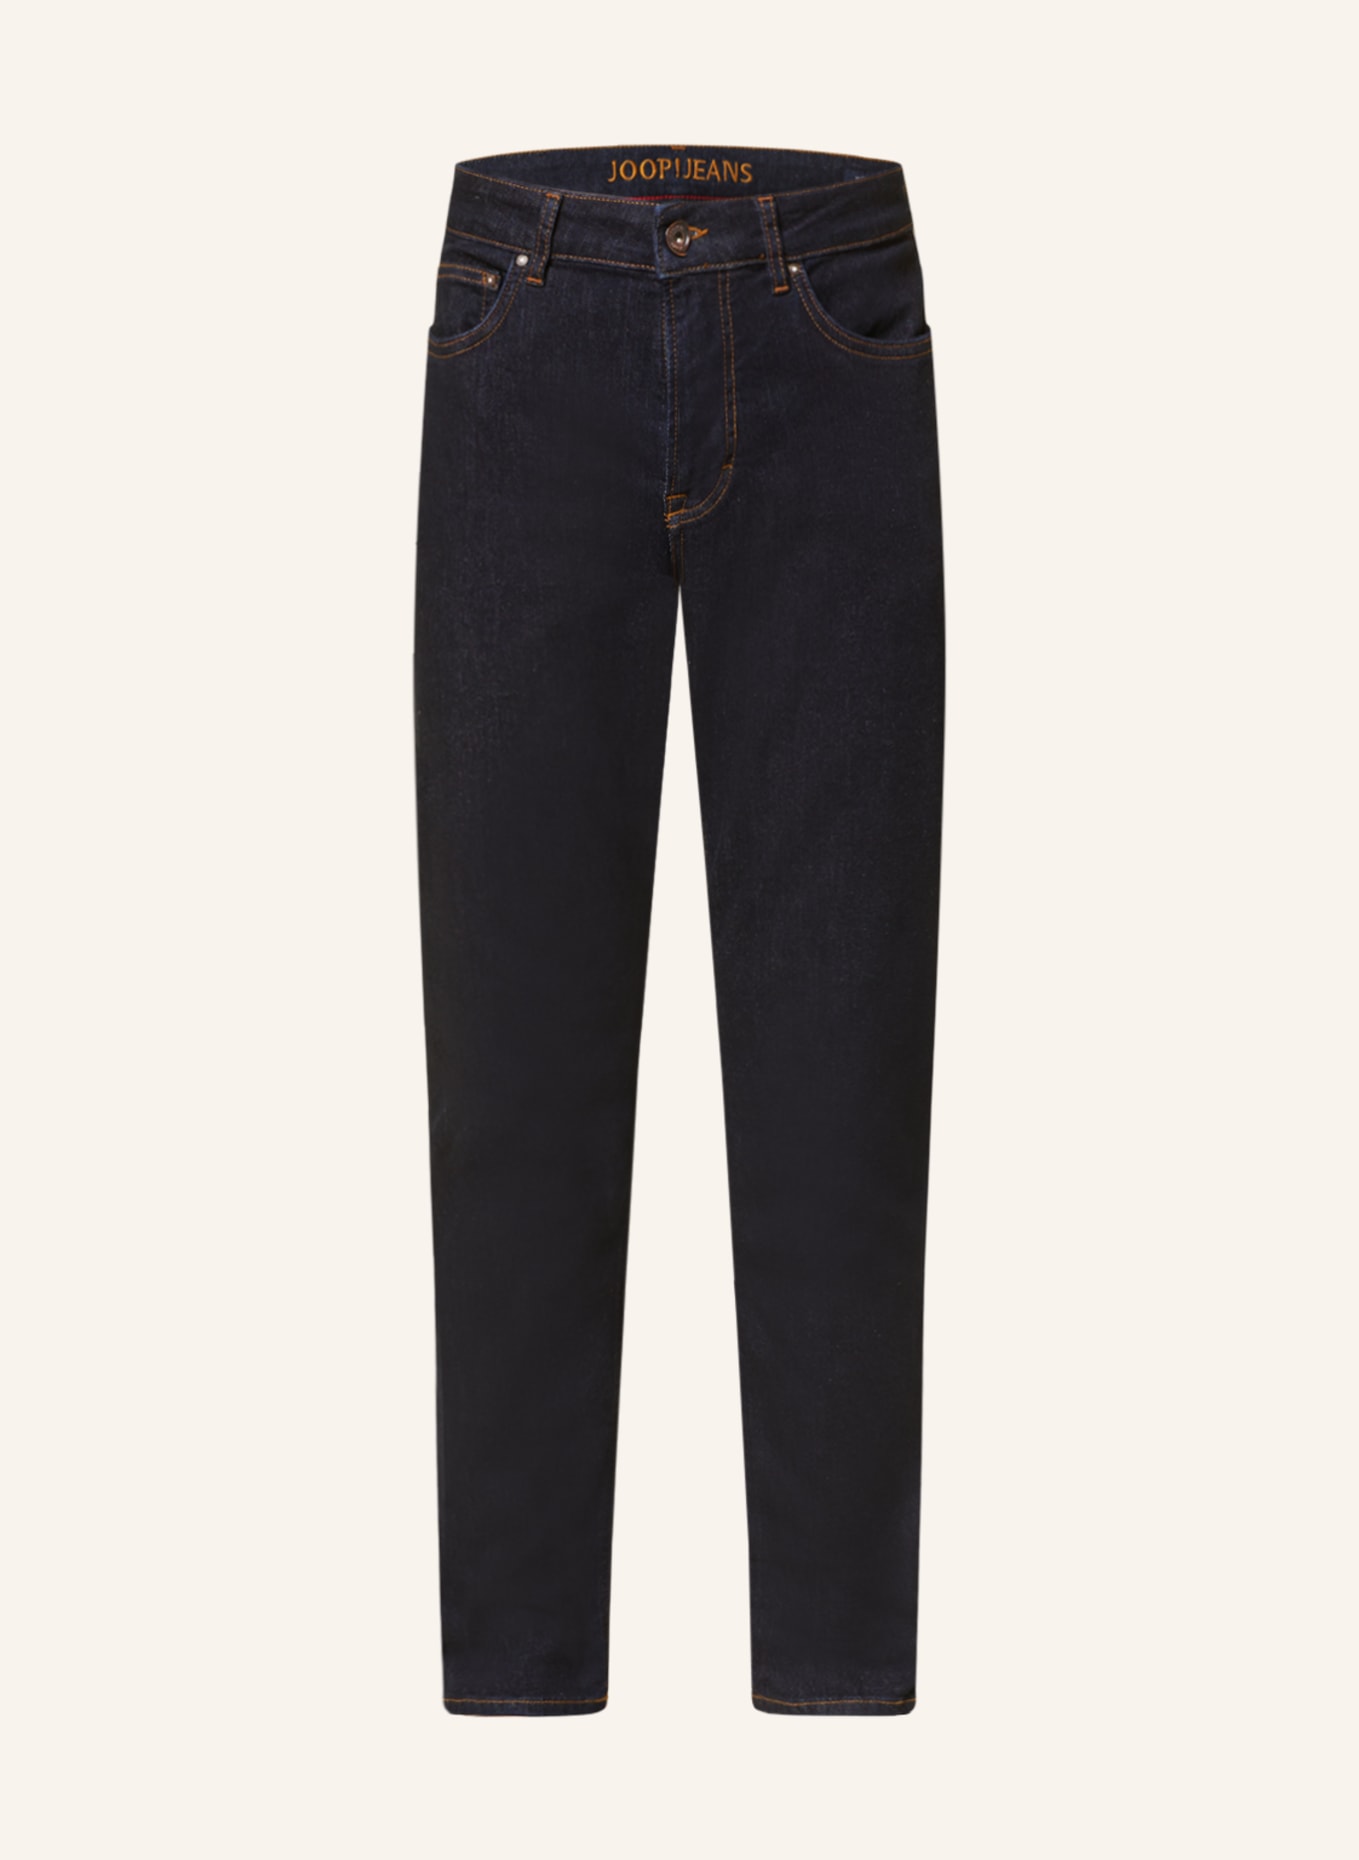 JOOP! JEANS Jeans MITCH Modern Fit, Farbe: 402 Dark Blue                  402 (Bild 1)